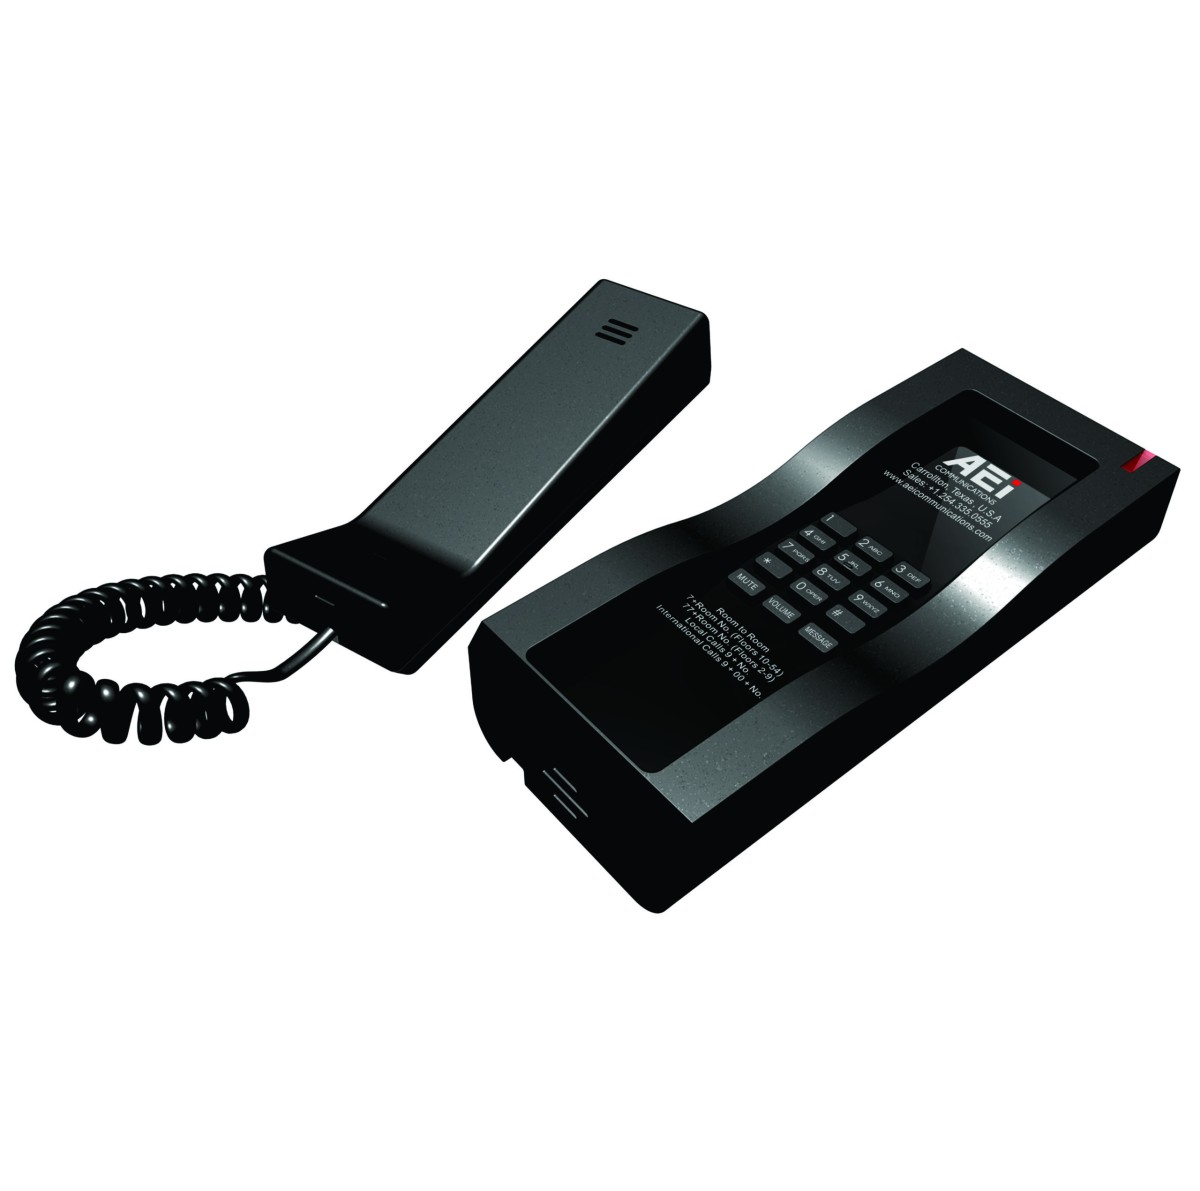 AEI SFT-1100/SFT-1106 Compact Single-Line IP Corded Telephone